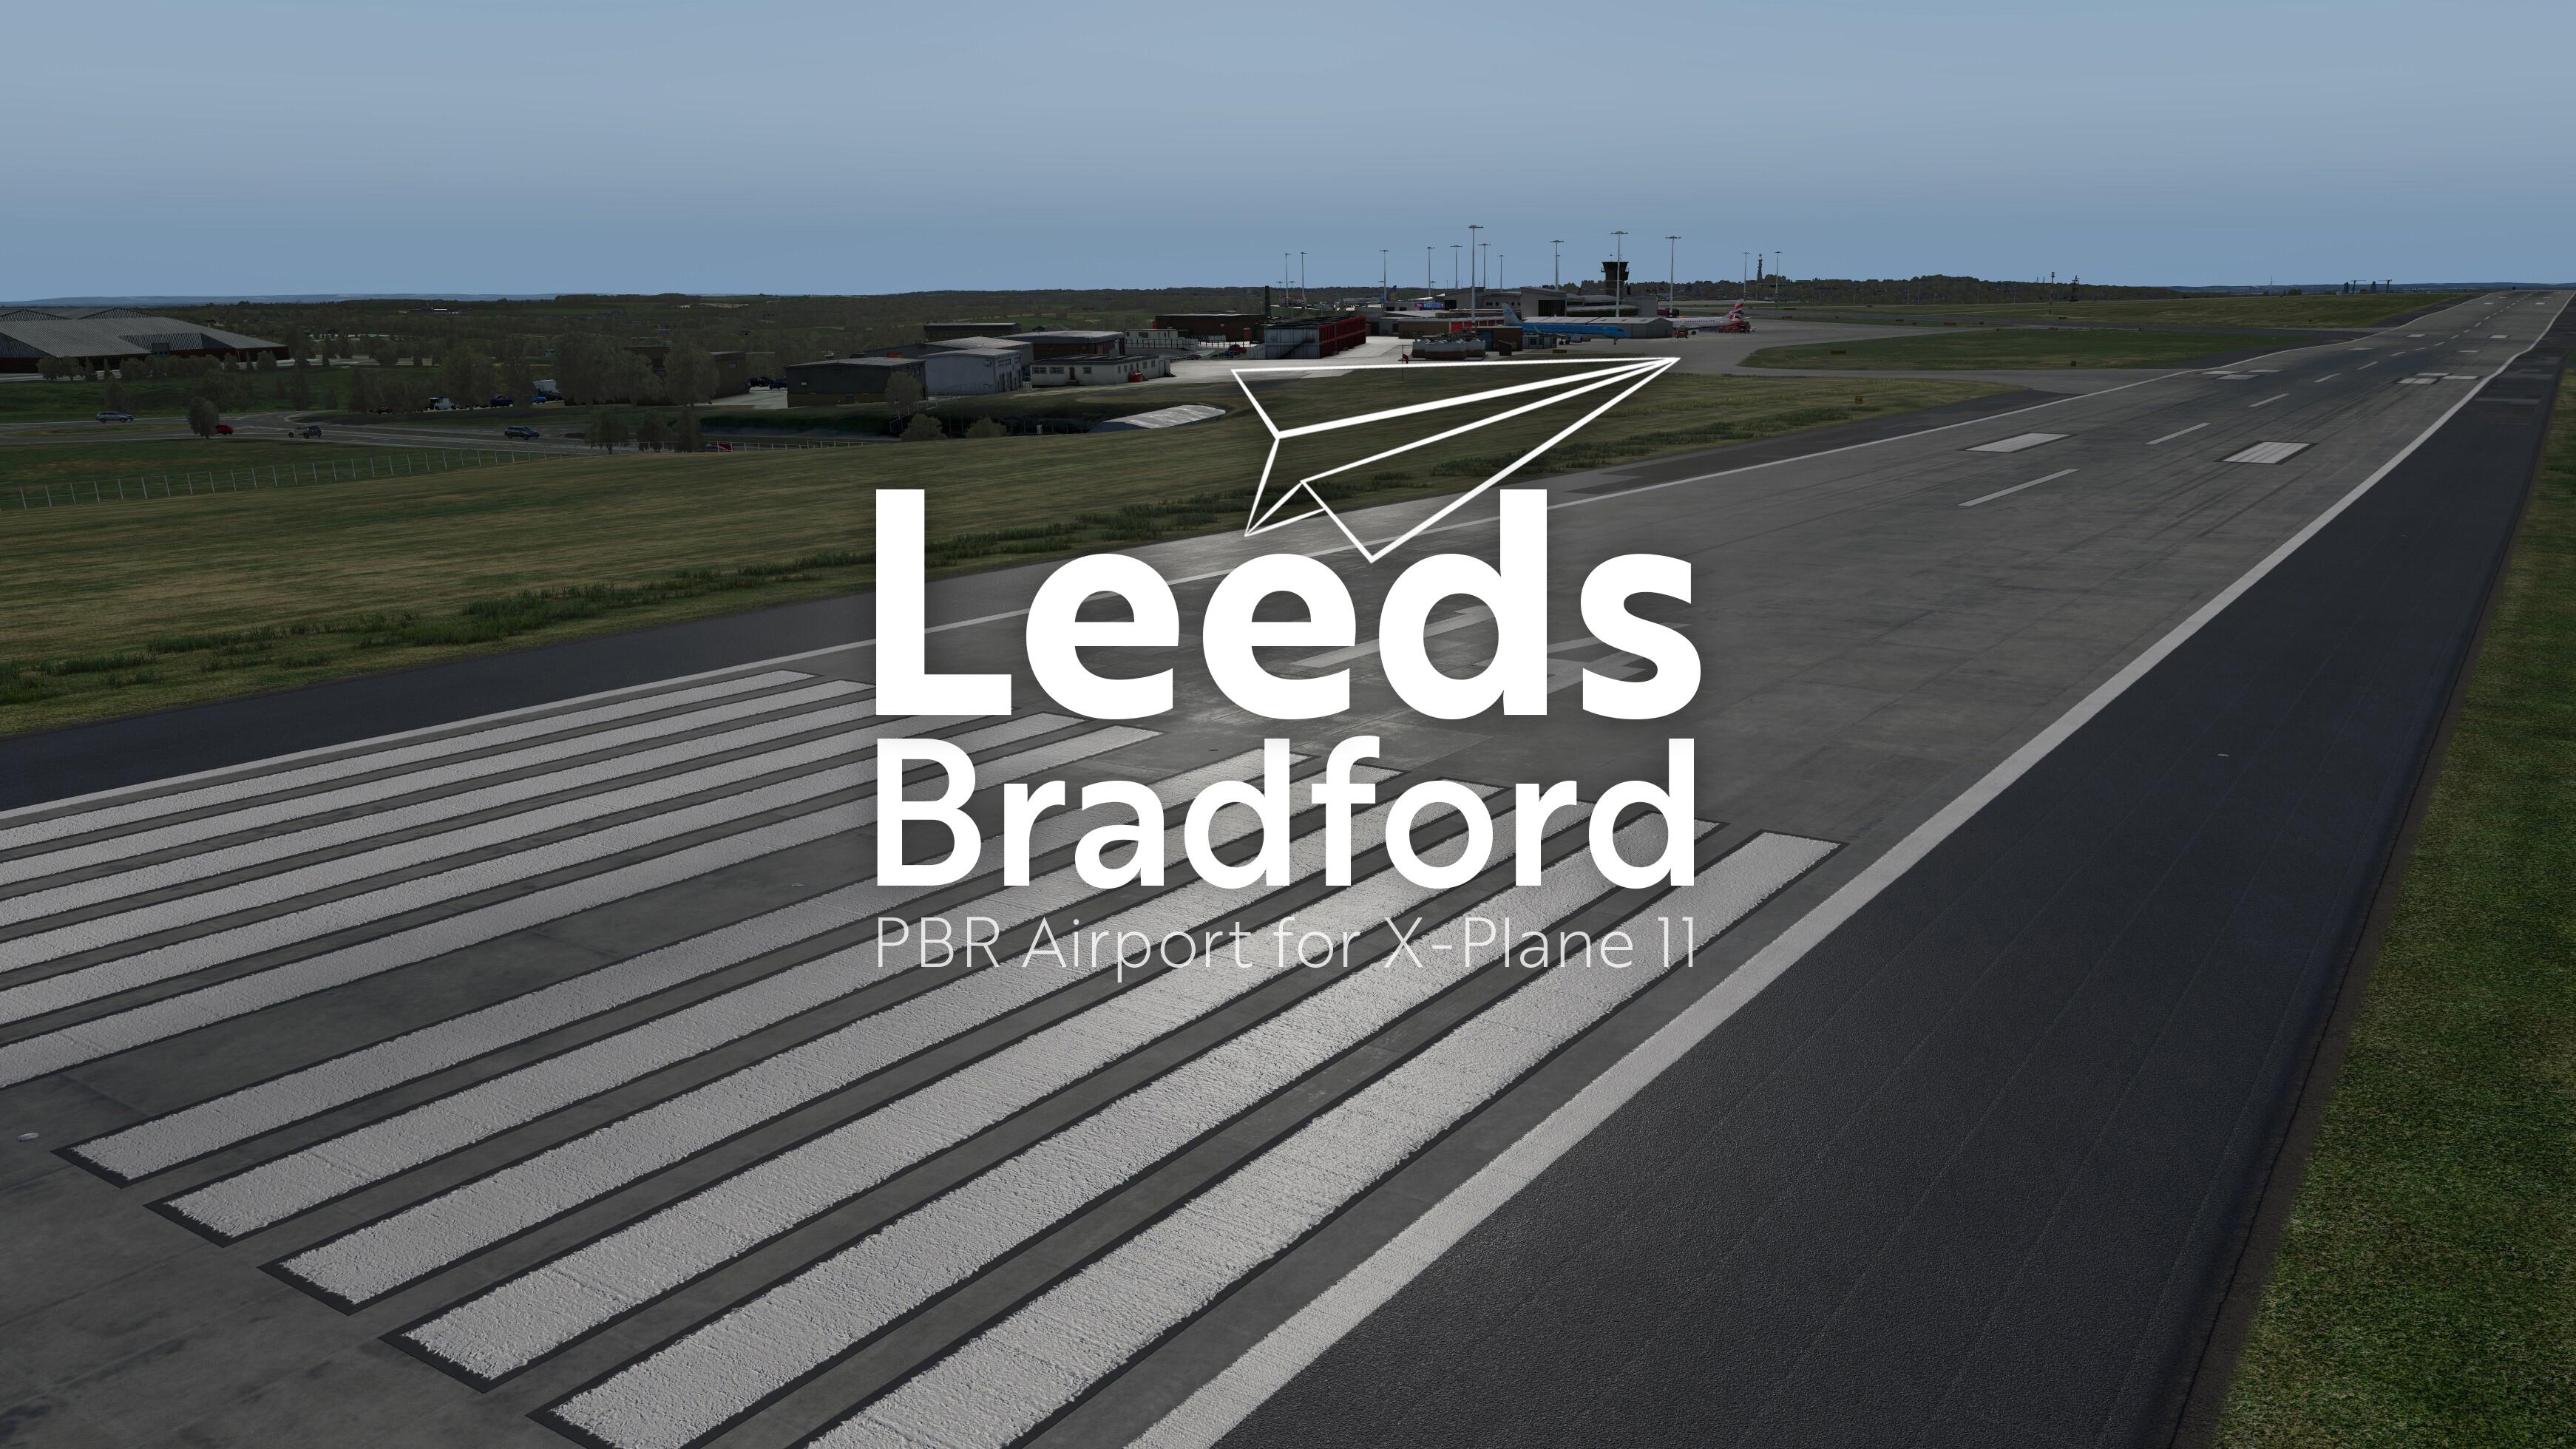 Orbx Releases EGNM Leeds Bradford for X-Plane 11